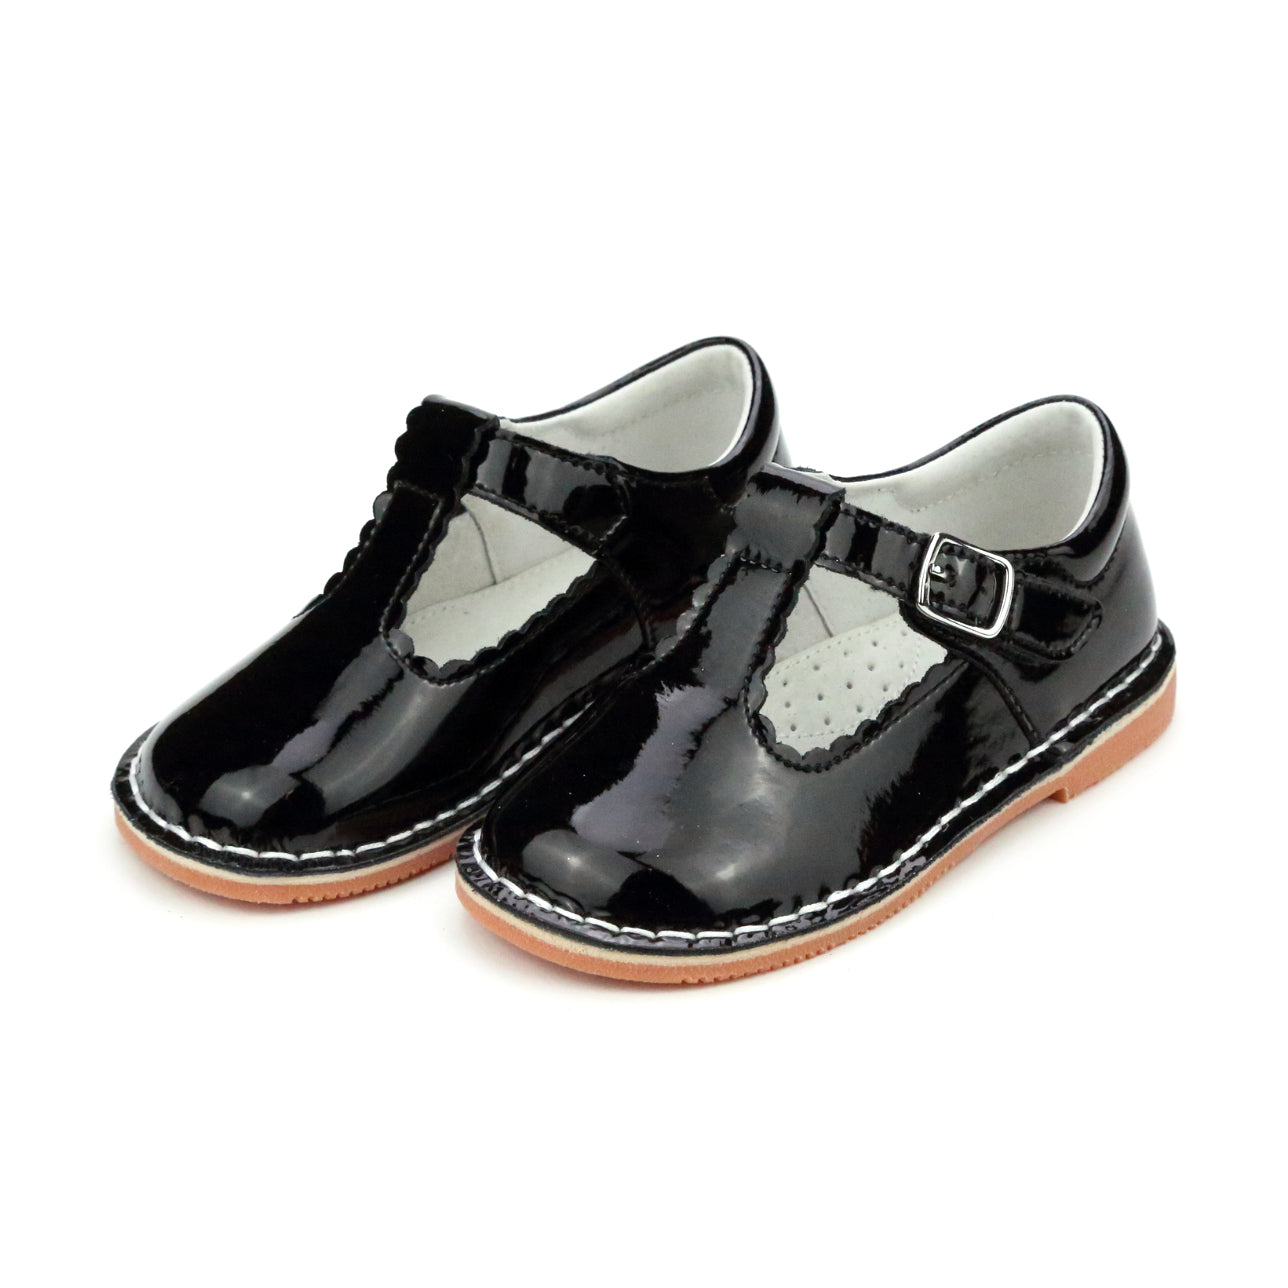 T Strap Black Leather Shoes Black Patent Leather T Strap 